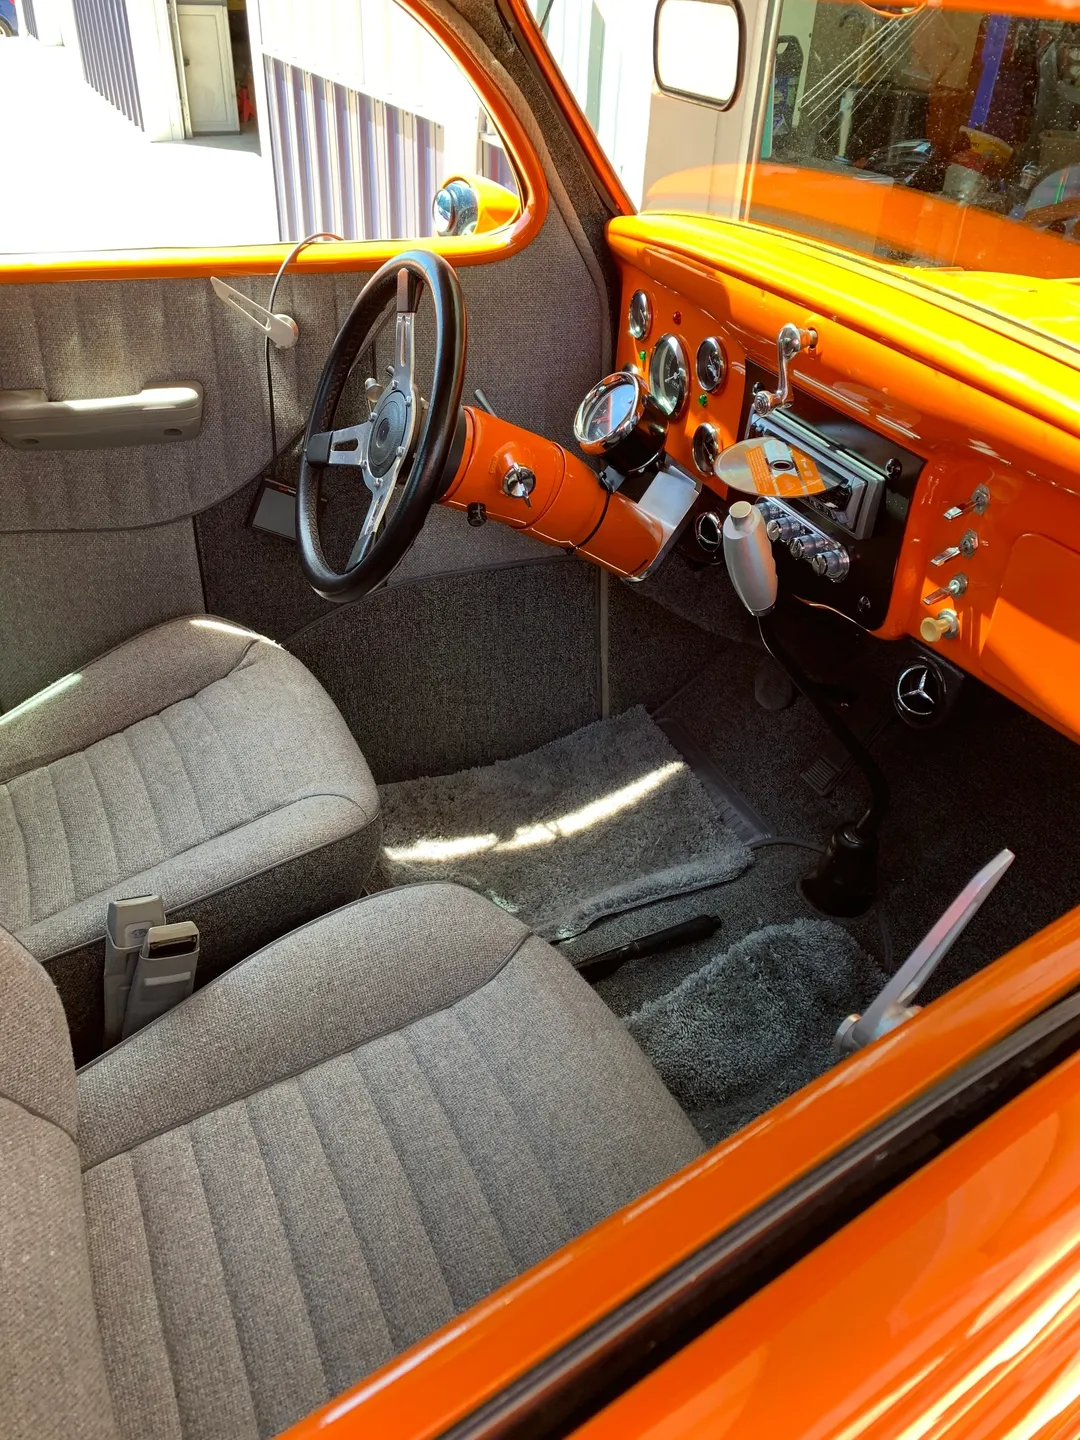 The interior of an orange vintage car